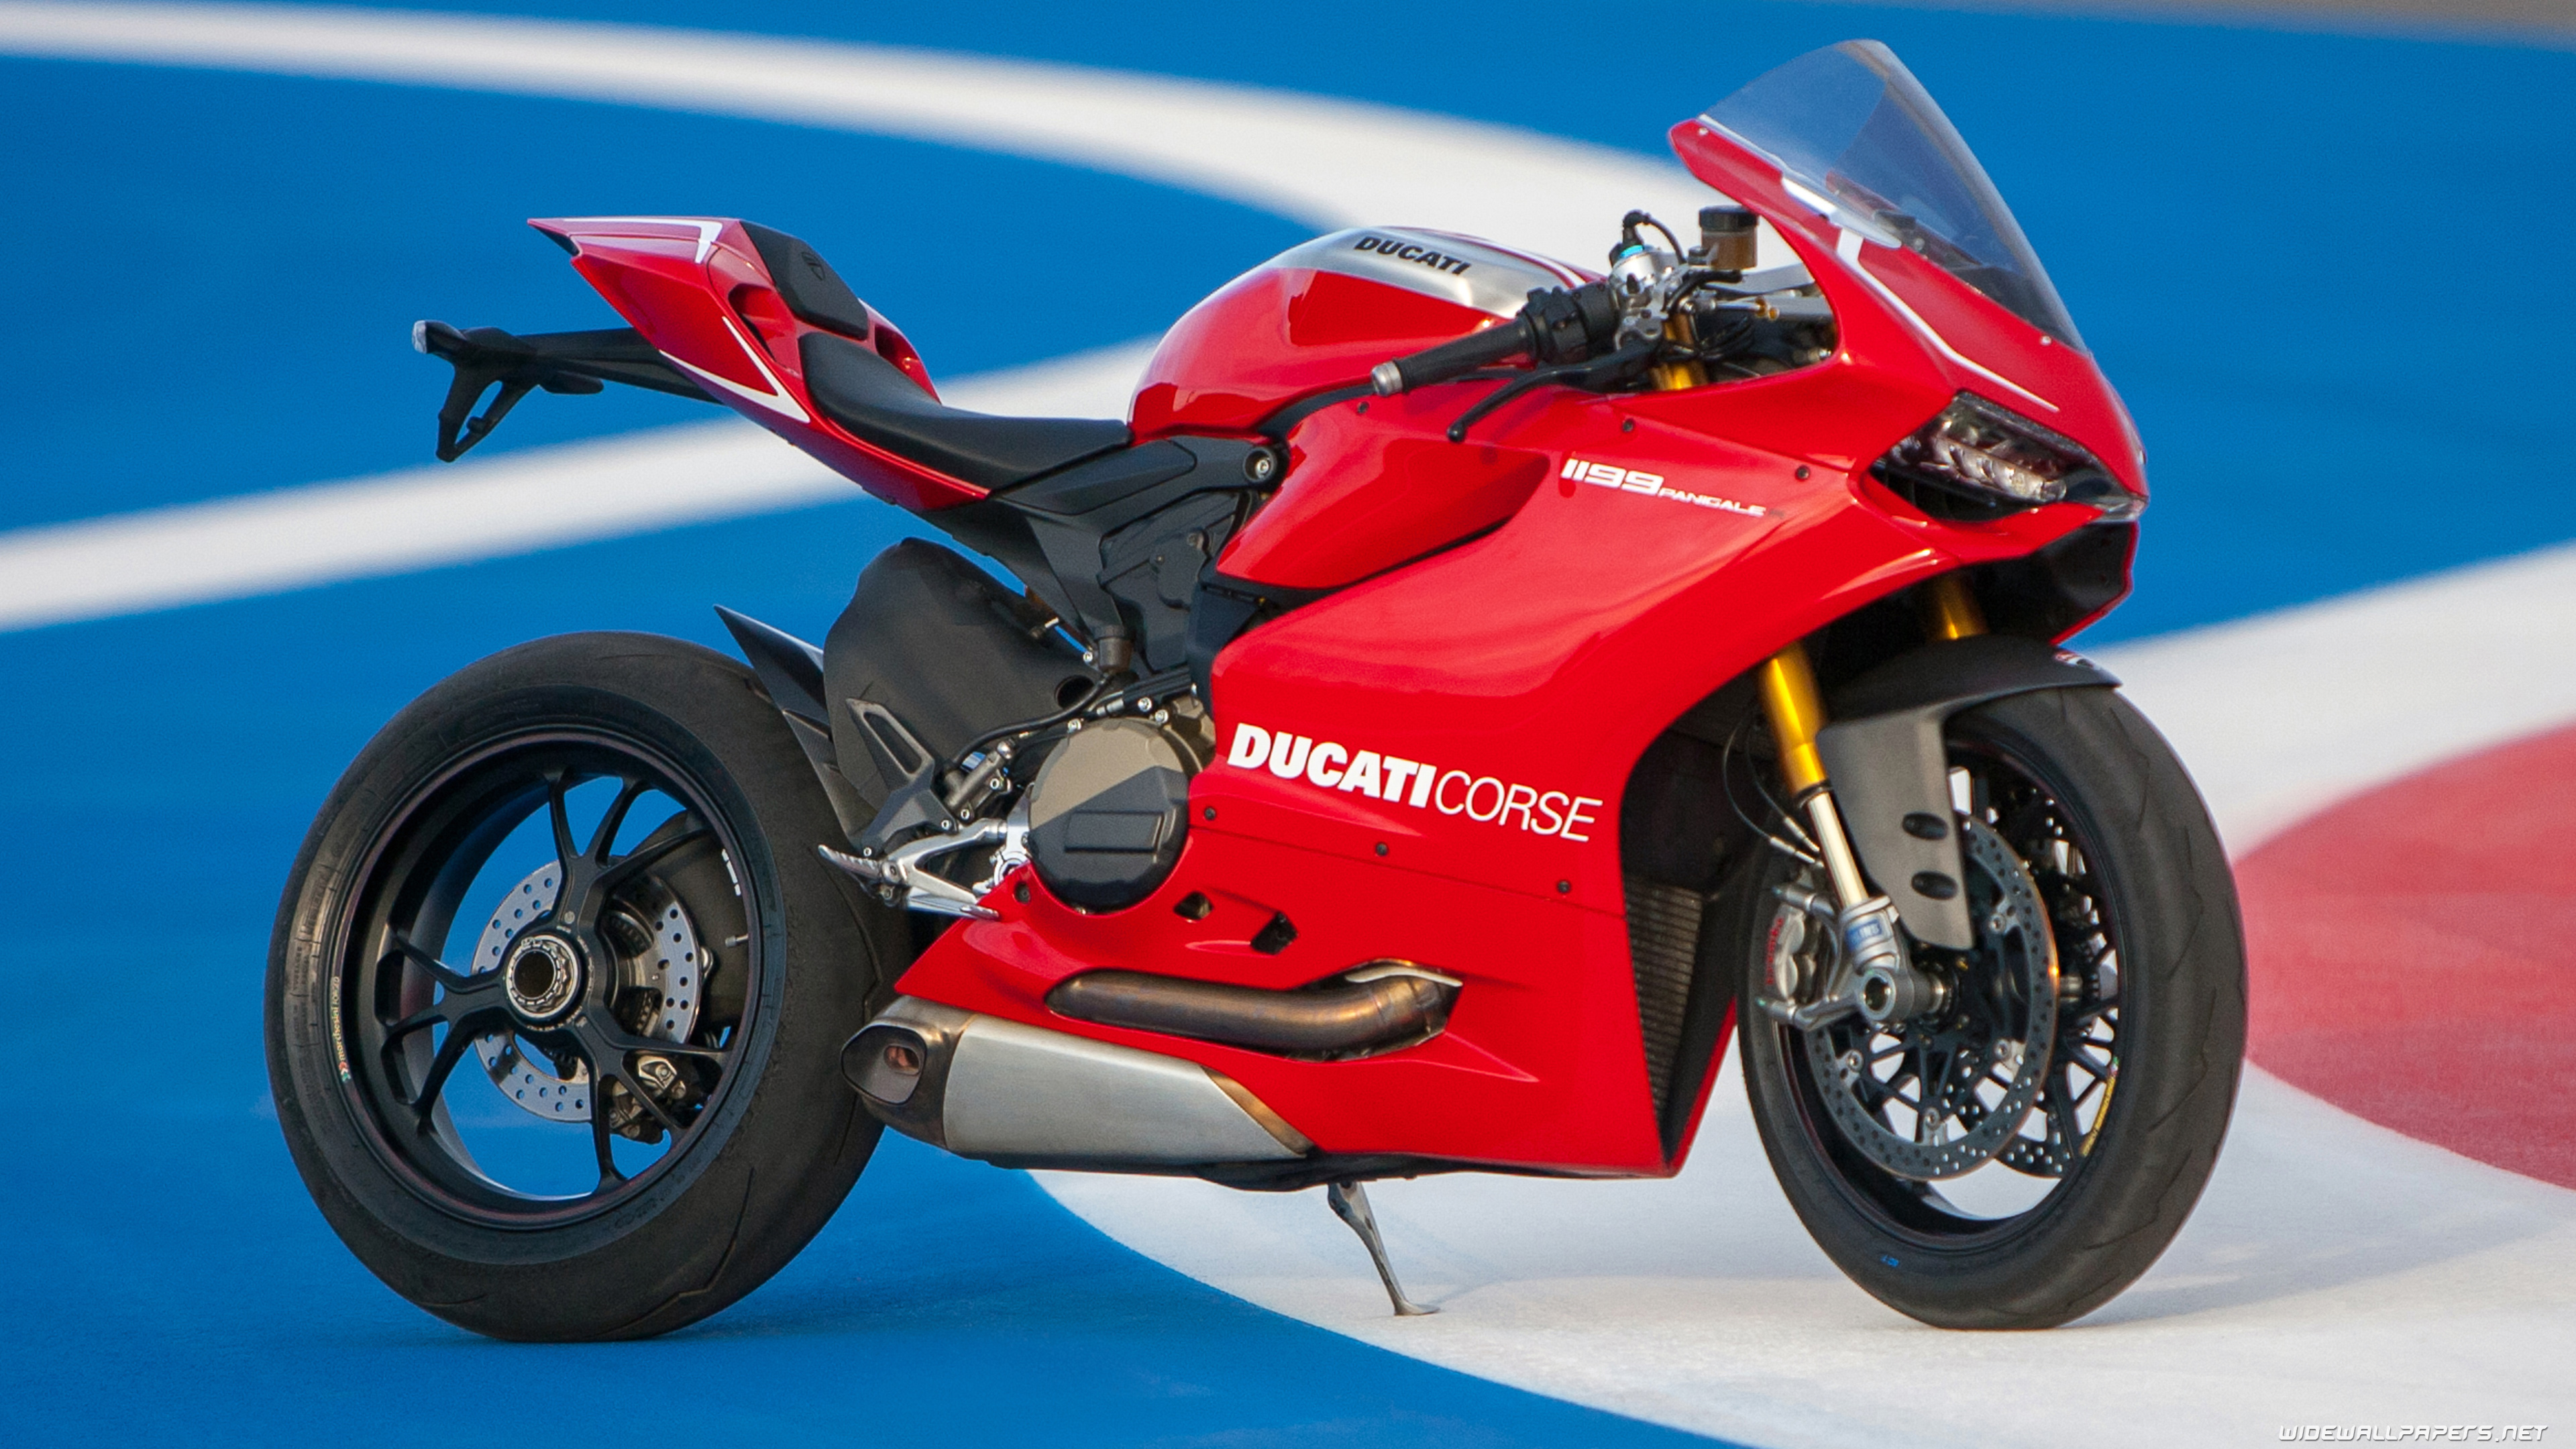 Ducati Superbike 1199 Panigale motorcycle desktop 3840x2160